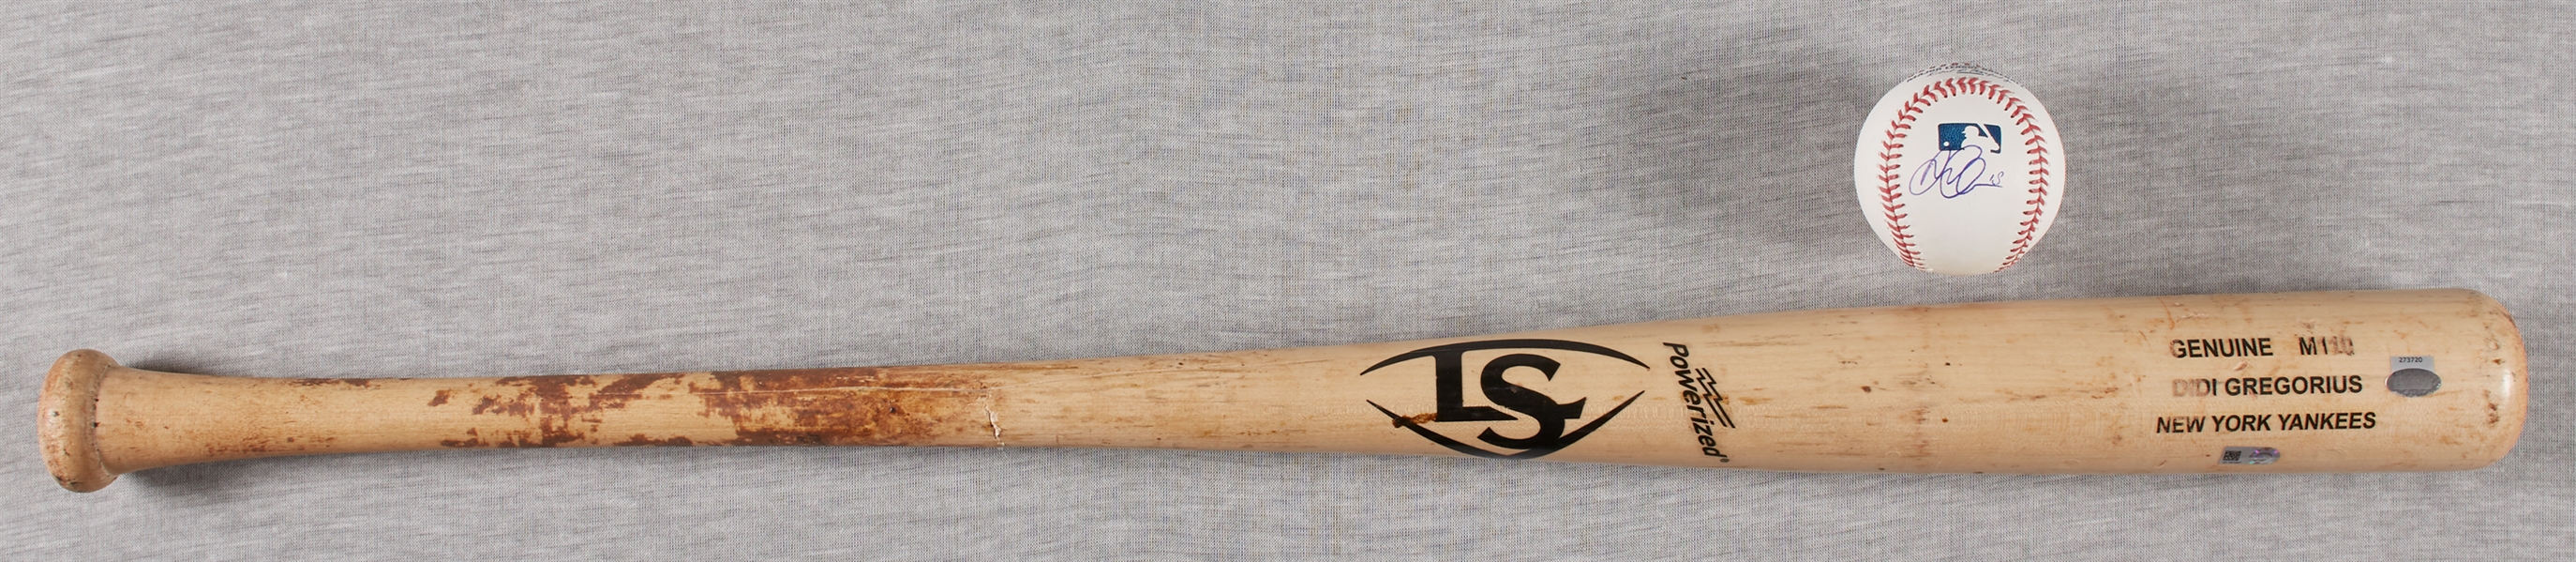 Didi Gregorius 2018 Game-Used Louisville Slugger Bat with Signed Baseball (MLB) (Steiner)